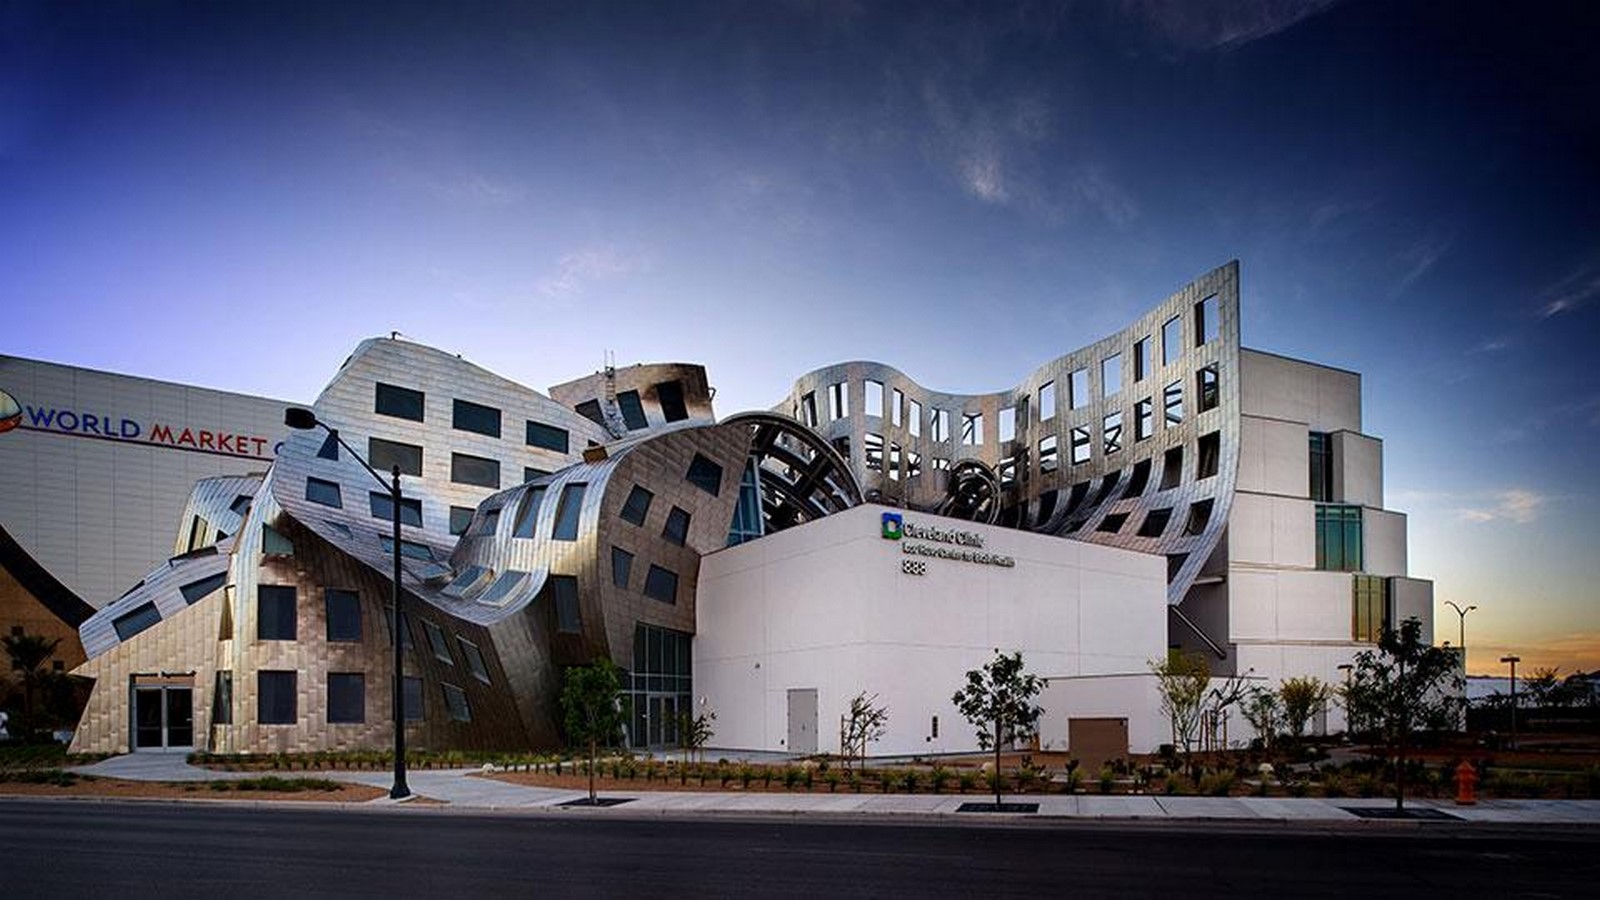 Frank Gehry: The Deconstructivist Architect Who Creates Sculptural Buildings - Sheet13